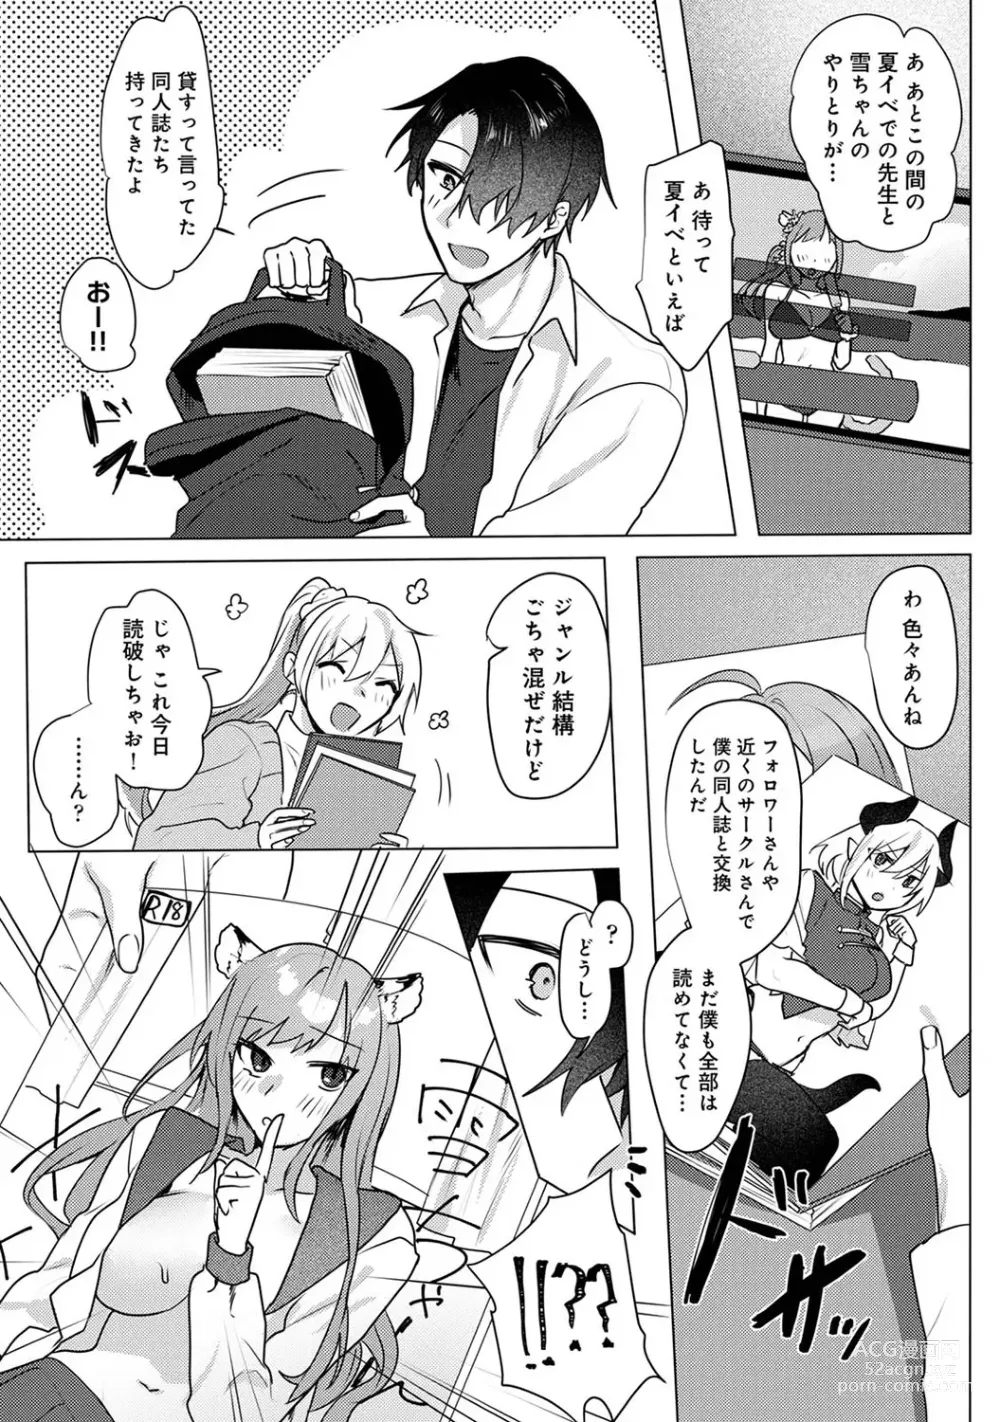 Page 7 of manga Otaku-kun, doujinshi sokubaikai detekunne!? Ch. 4